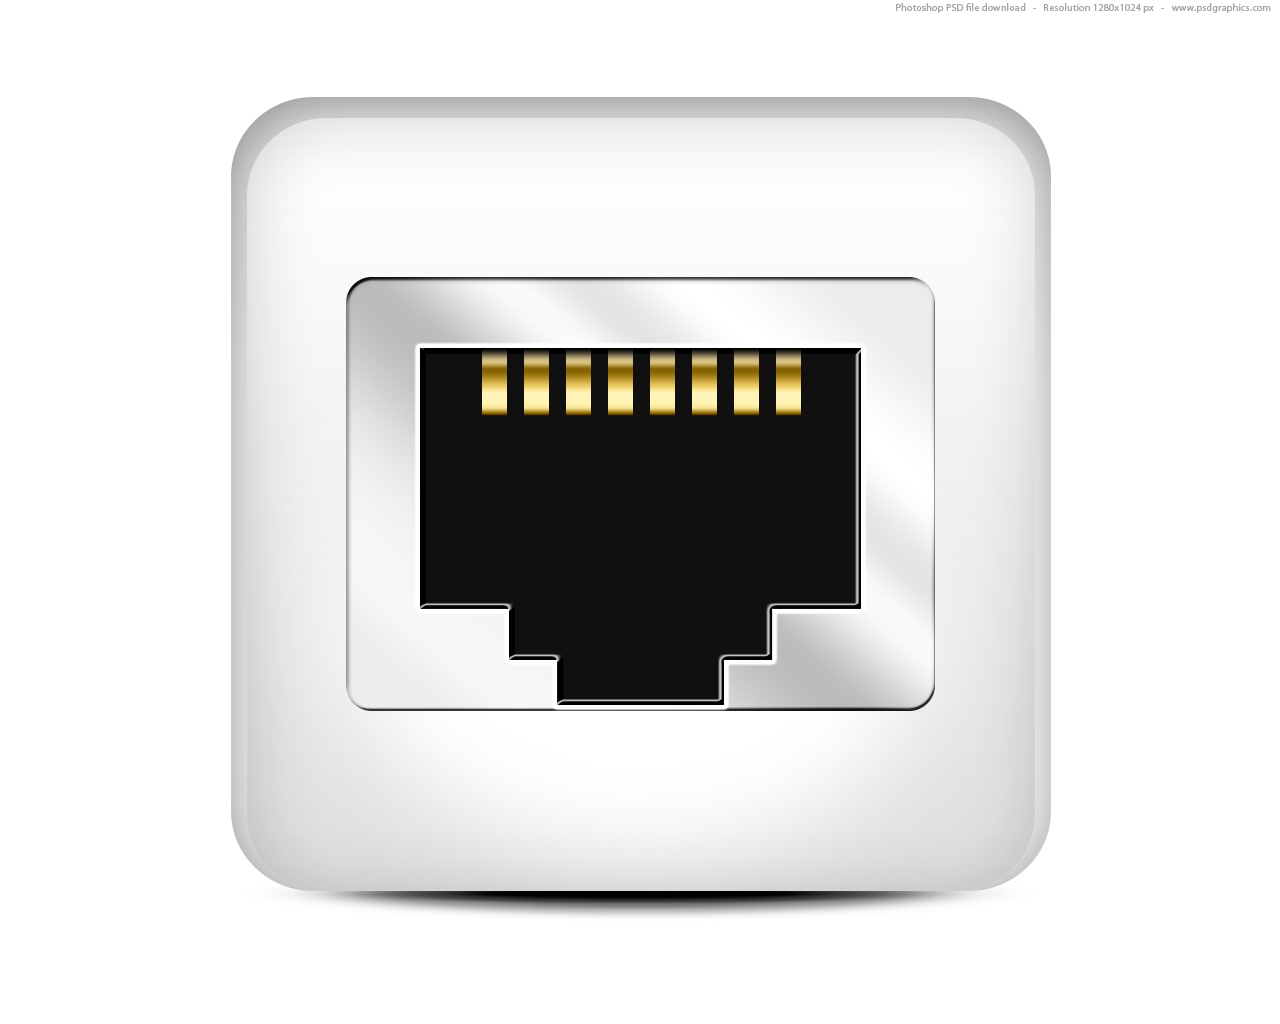 Cable, computer, data, network, port, server icon | Icon search engine